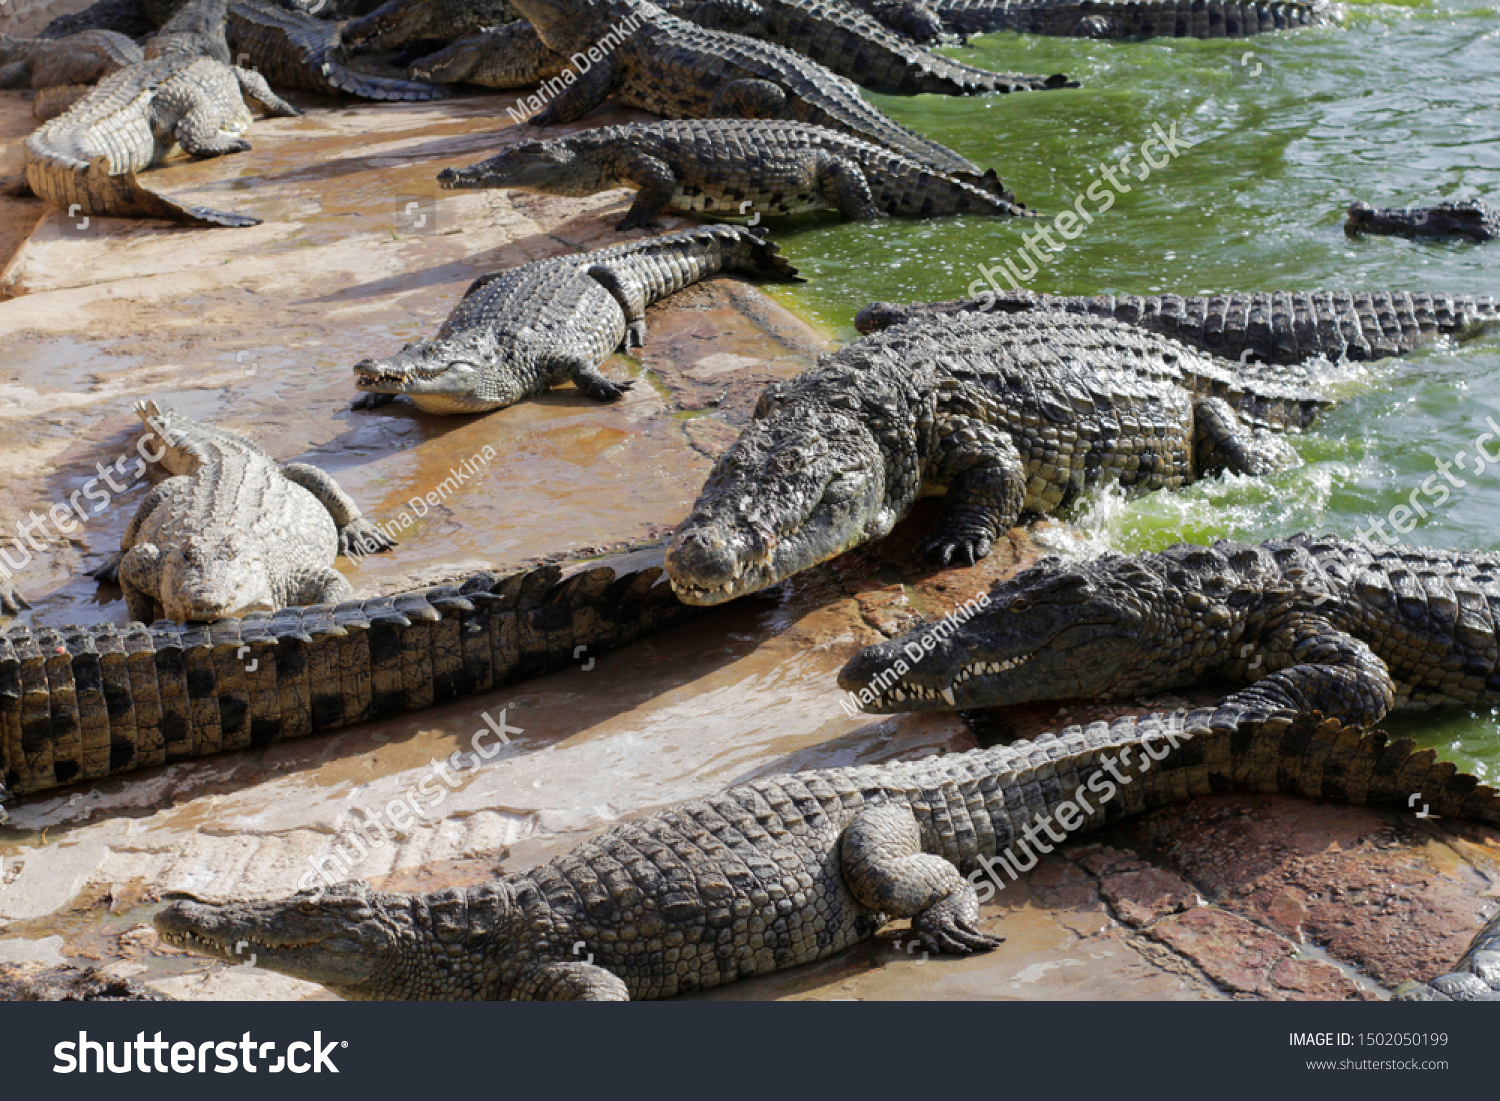 Crocodiles bask in the sun. Crocodiles in the pond. Crocodile farm. Cultivation of crocodiles. Crocodile sharp teeth. #1502050199